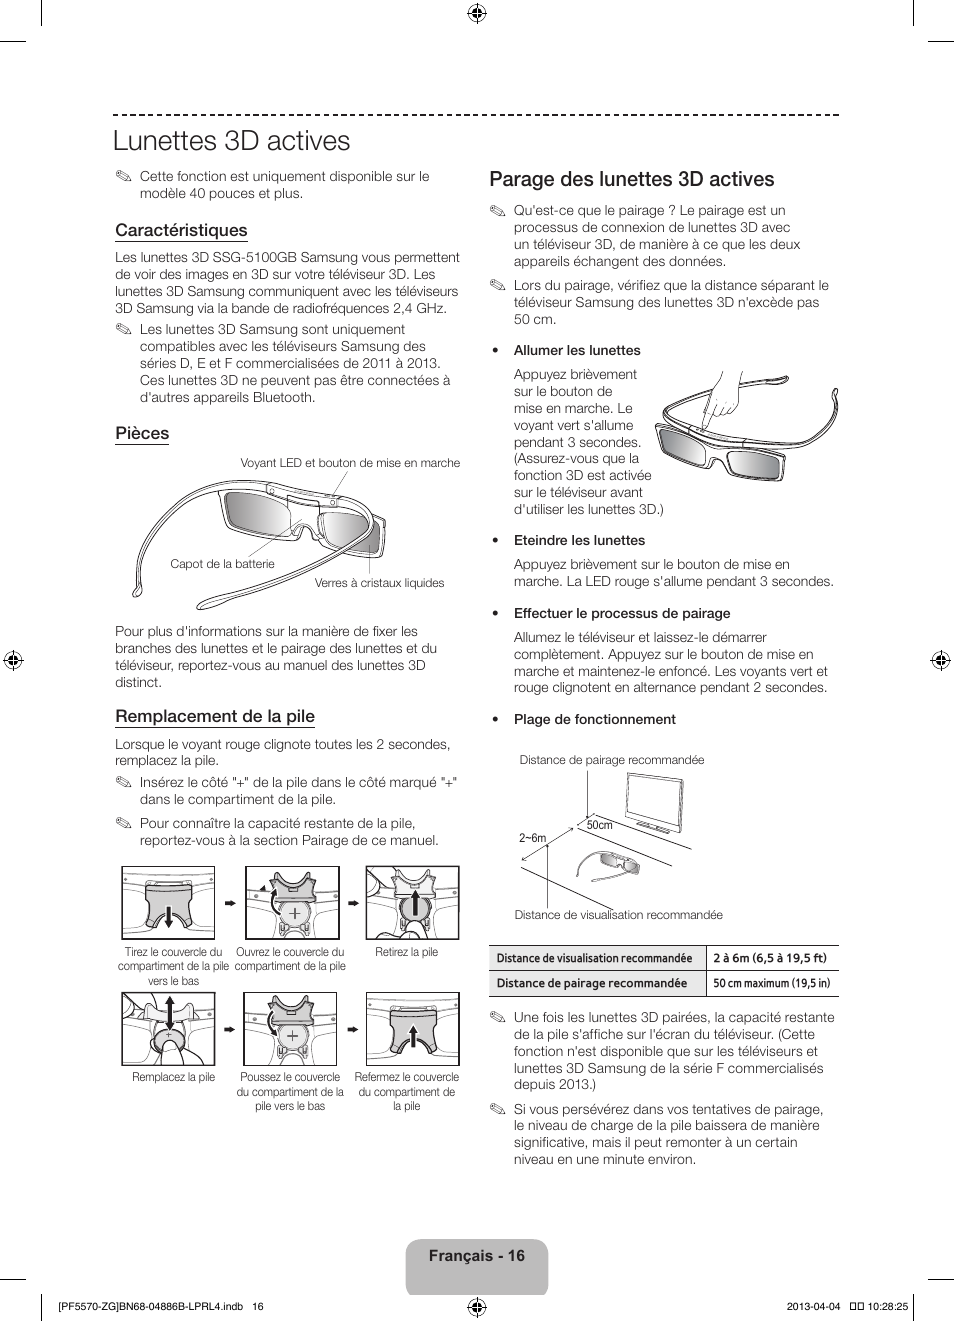 Lunettes 3d actives, Parage des lunettes 3d actives | Samsung PS60F5570SS  User Manual | Page 40 / 97